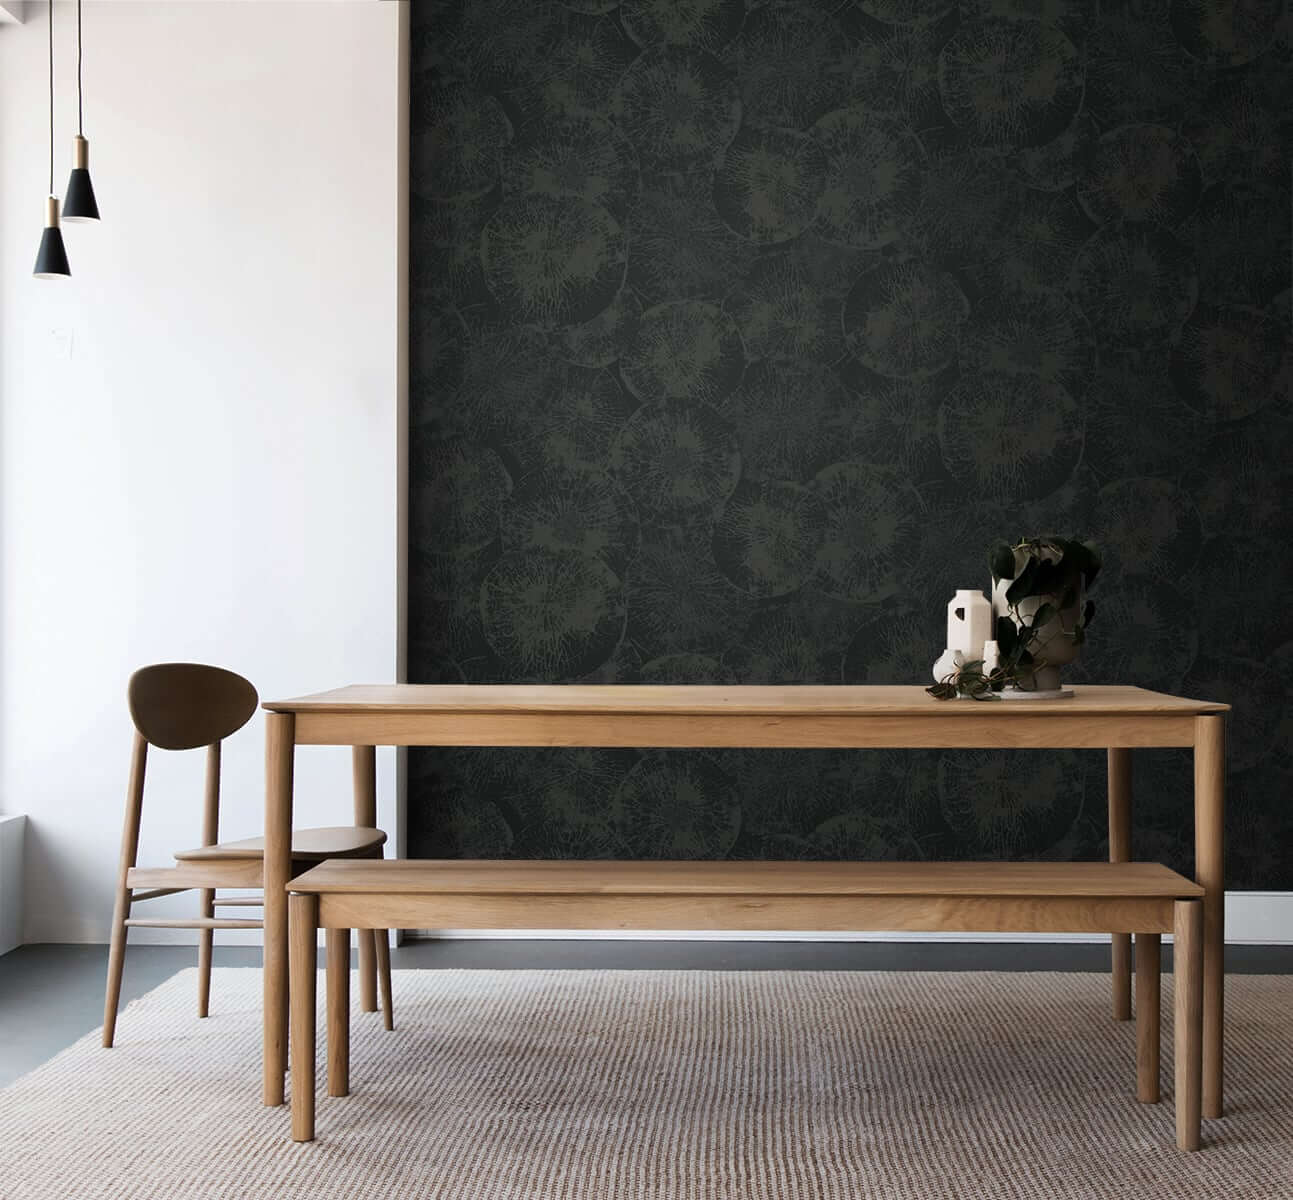 Seabrook Designs Japandi Style Eren Wallpaper - Rich Onyx